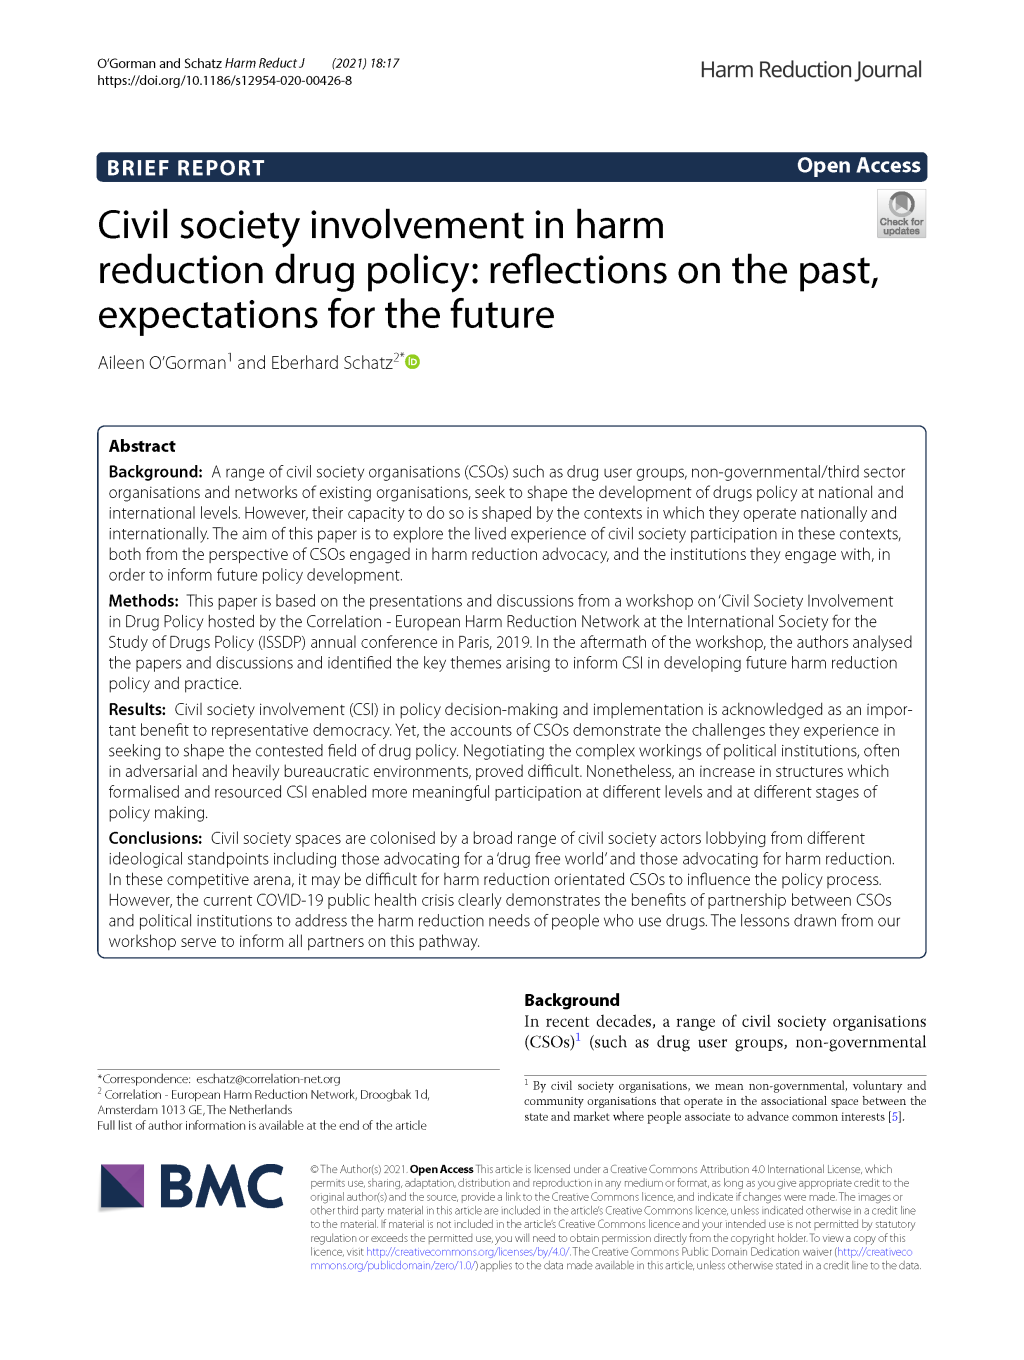 civil-society-involvement-in-harm-reduction-drug-policy-refl